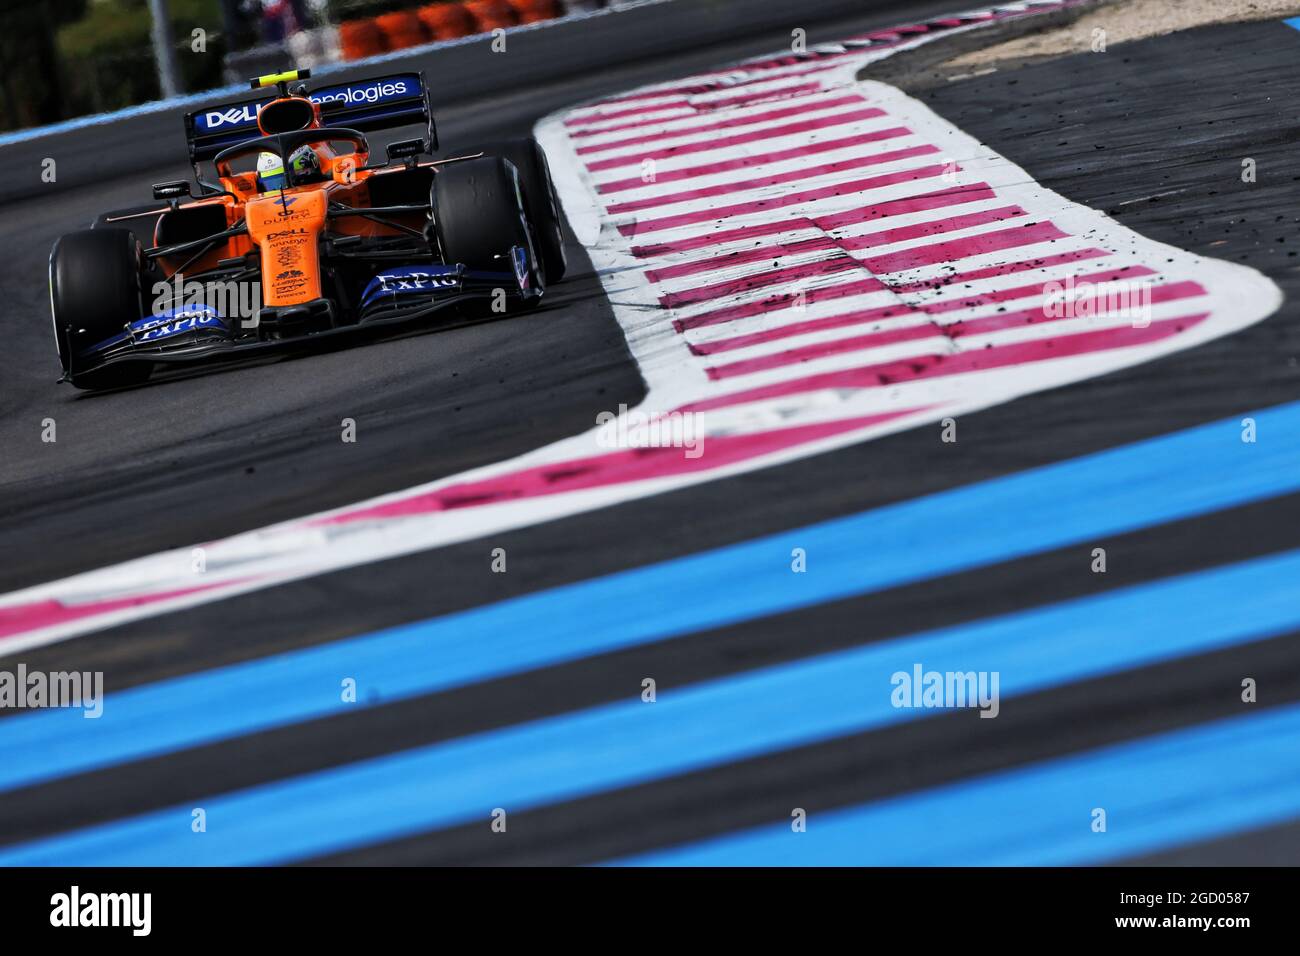 Lando Norris (GBR) McLaren MCL34. French Grand Prix, Sunday 23rd June 2019. Paul Ricard, France. Stock Photo